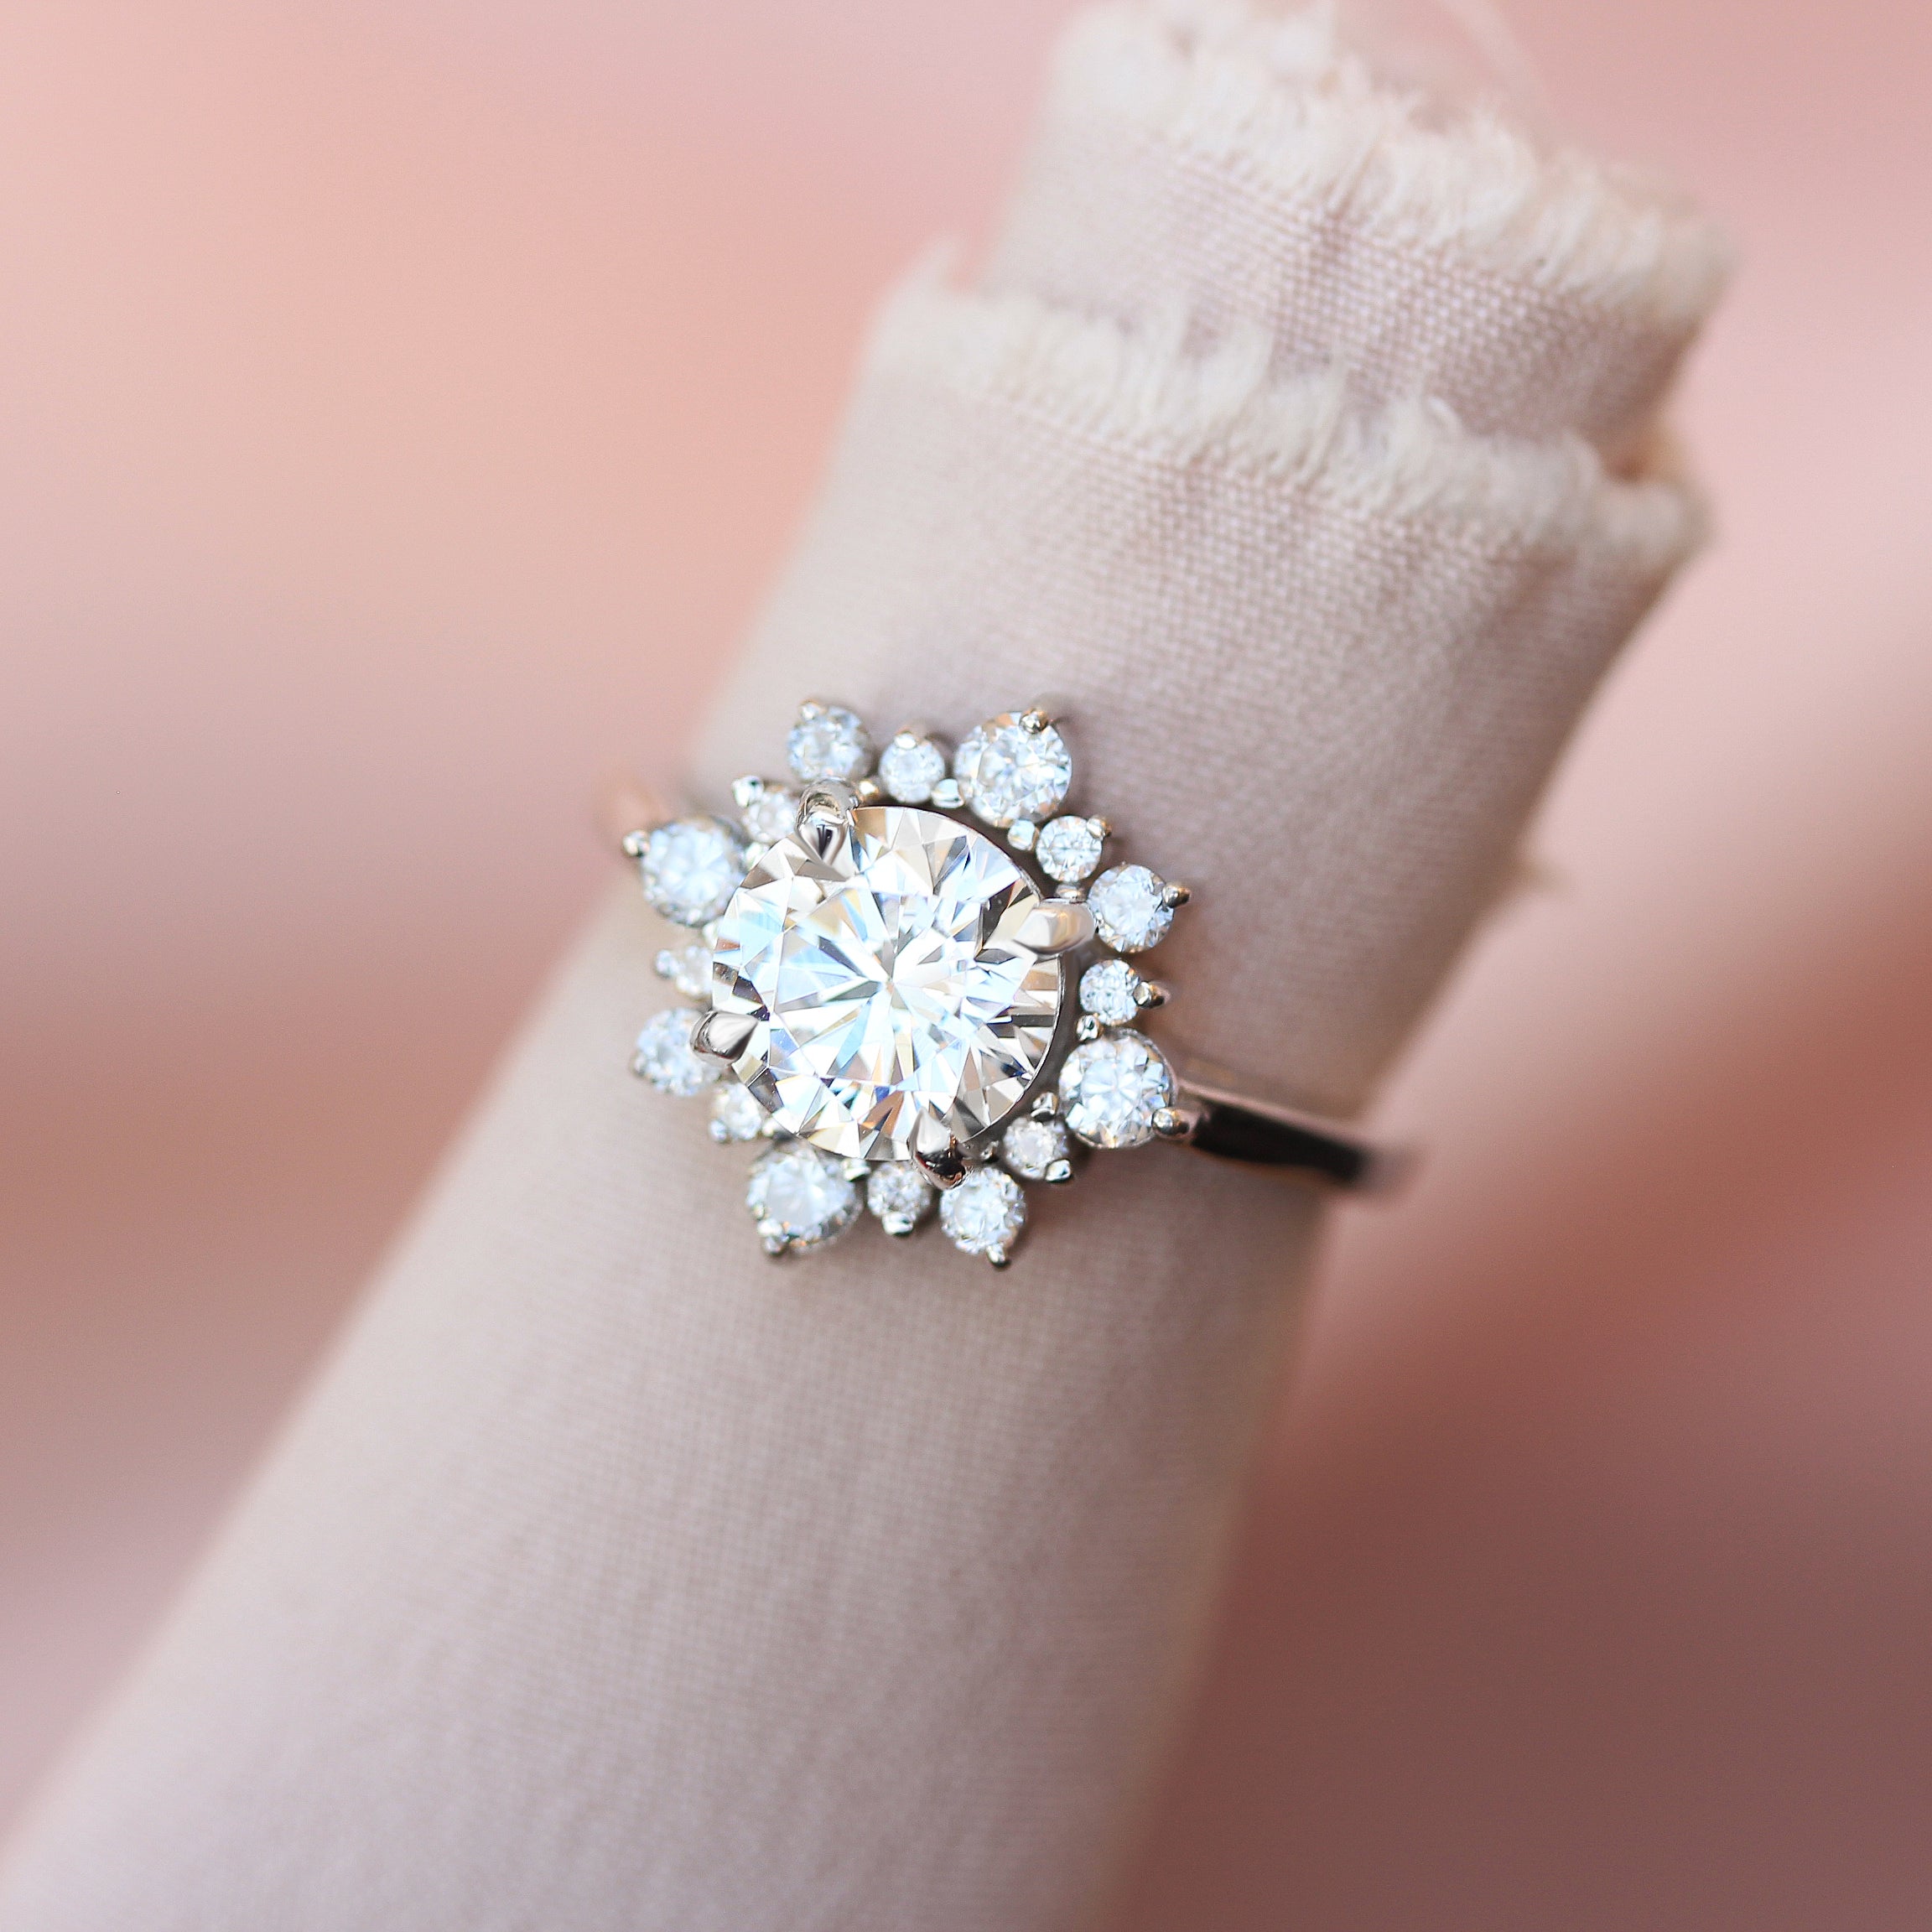 Round diamond halo unique engagement ring, "Snowflake"